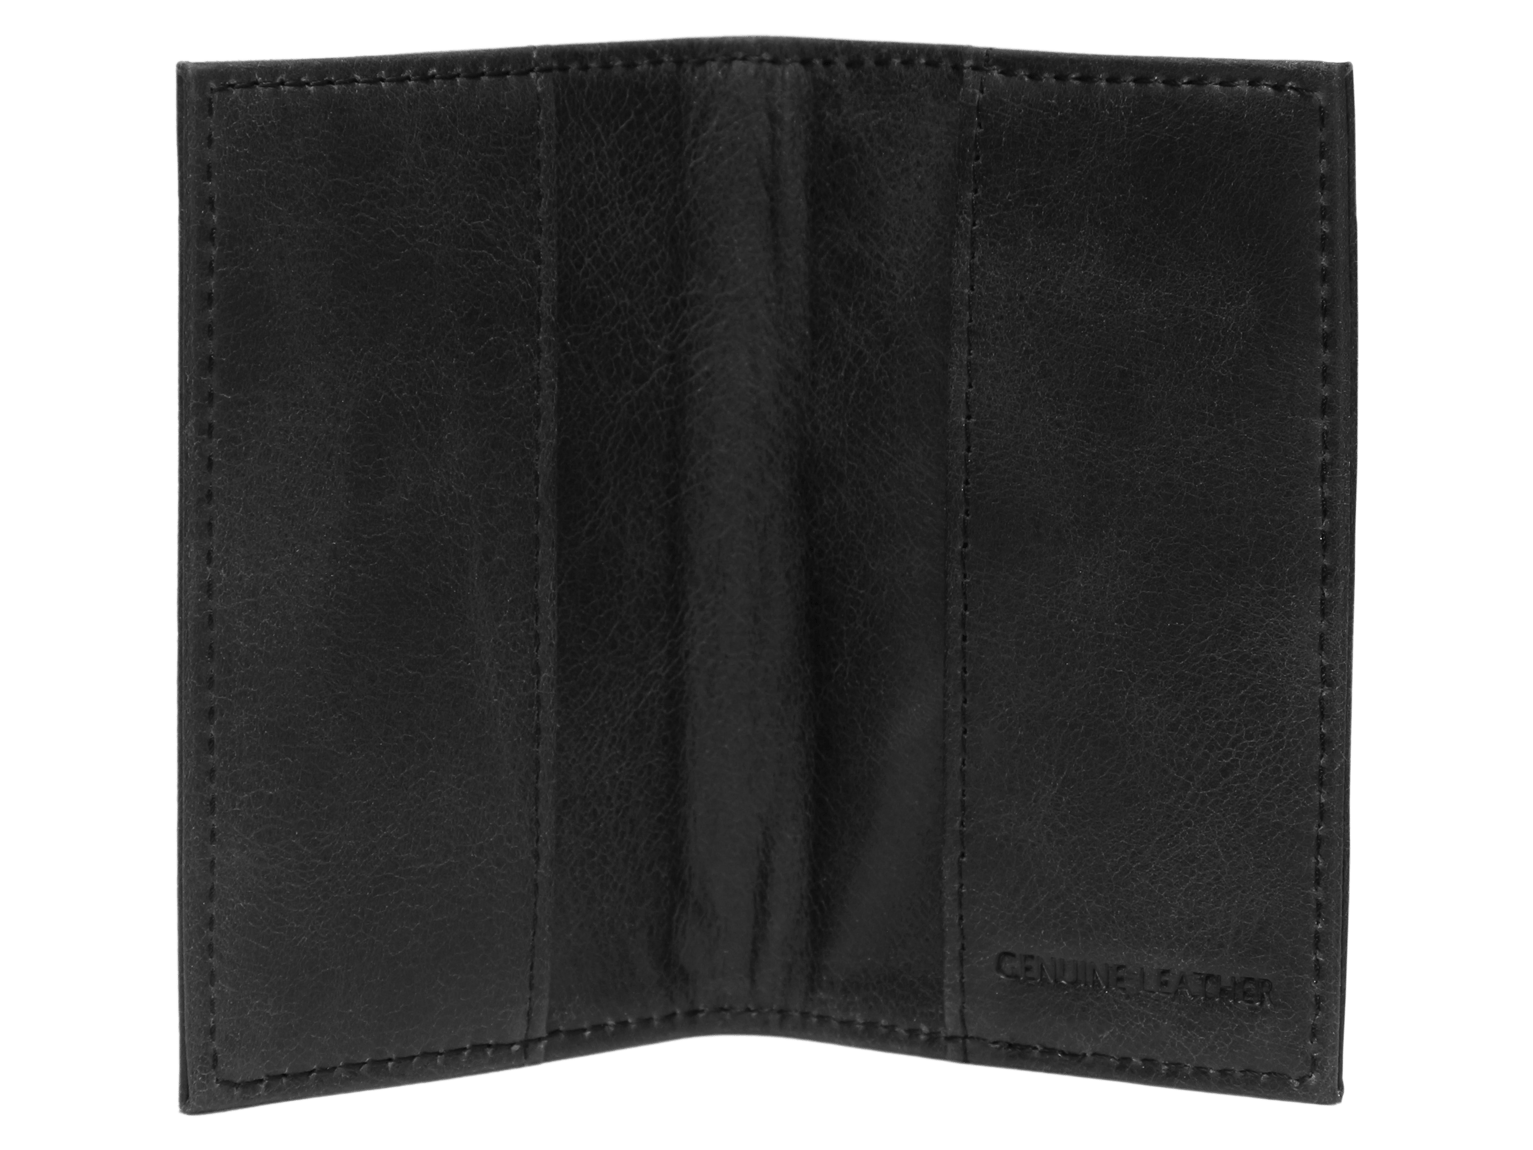 The Titou Card Wallet in Onyx Black #onyx-black